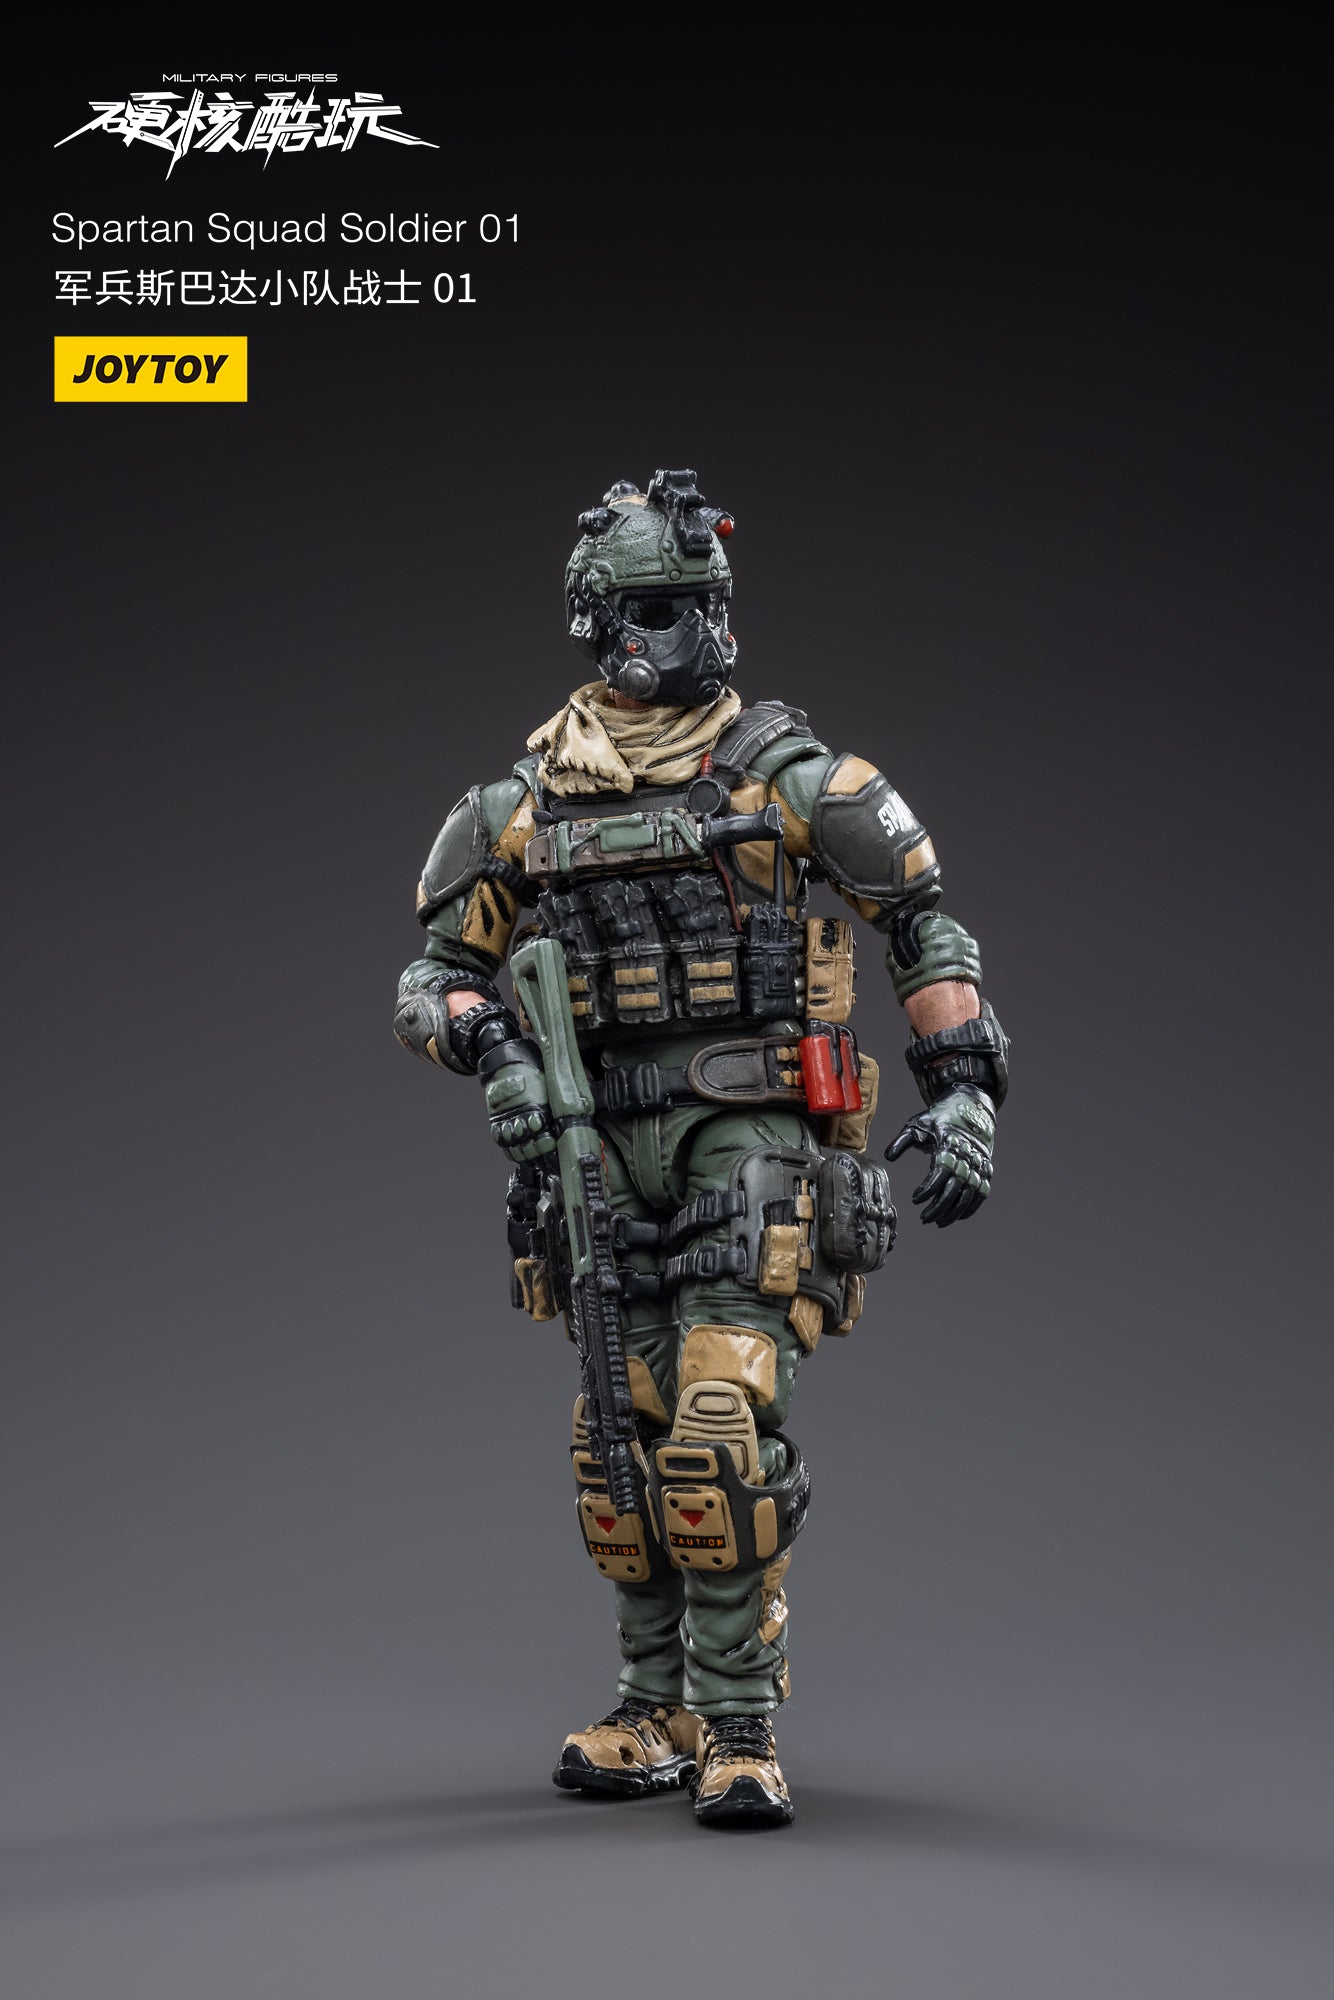 Spartan Squad Soldier 01